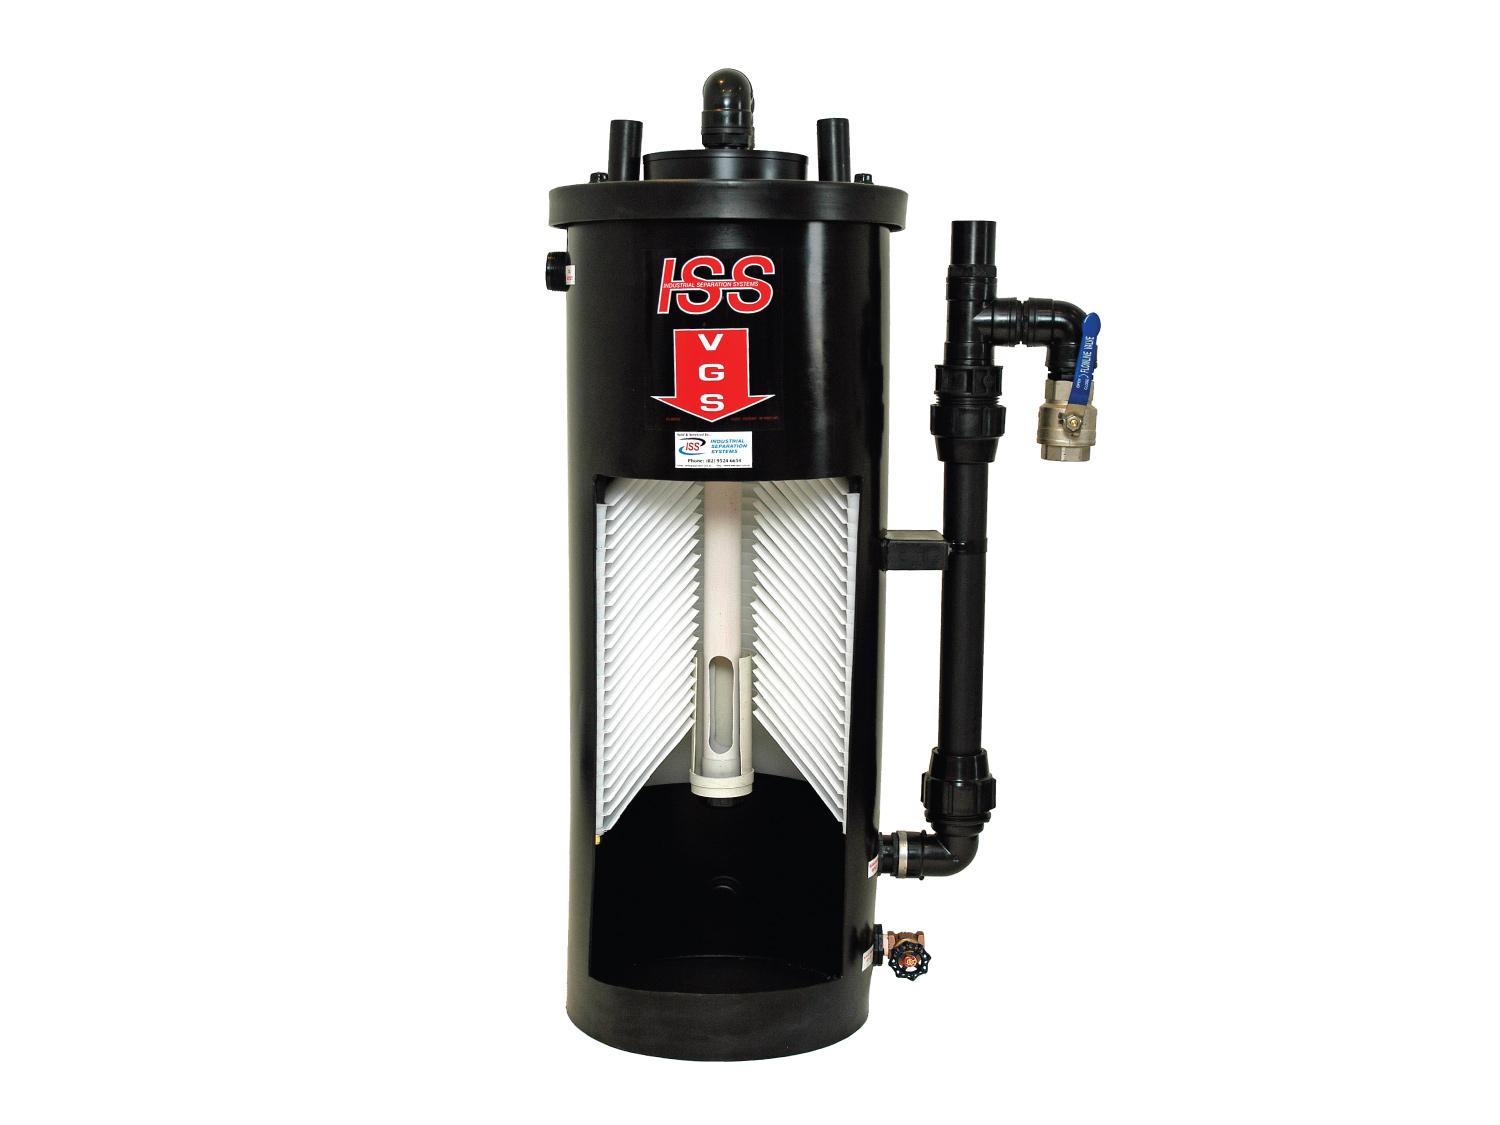 Oil Water Separator - VGS Free Standing Model